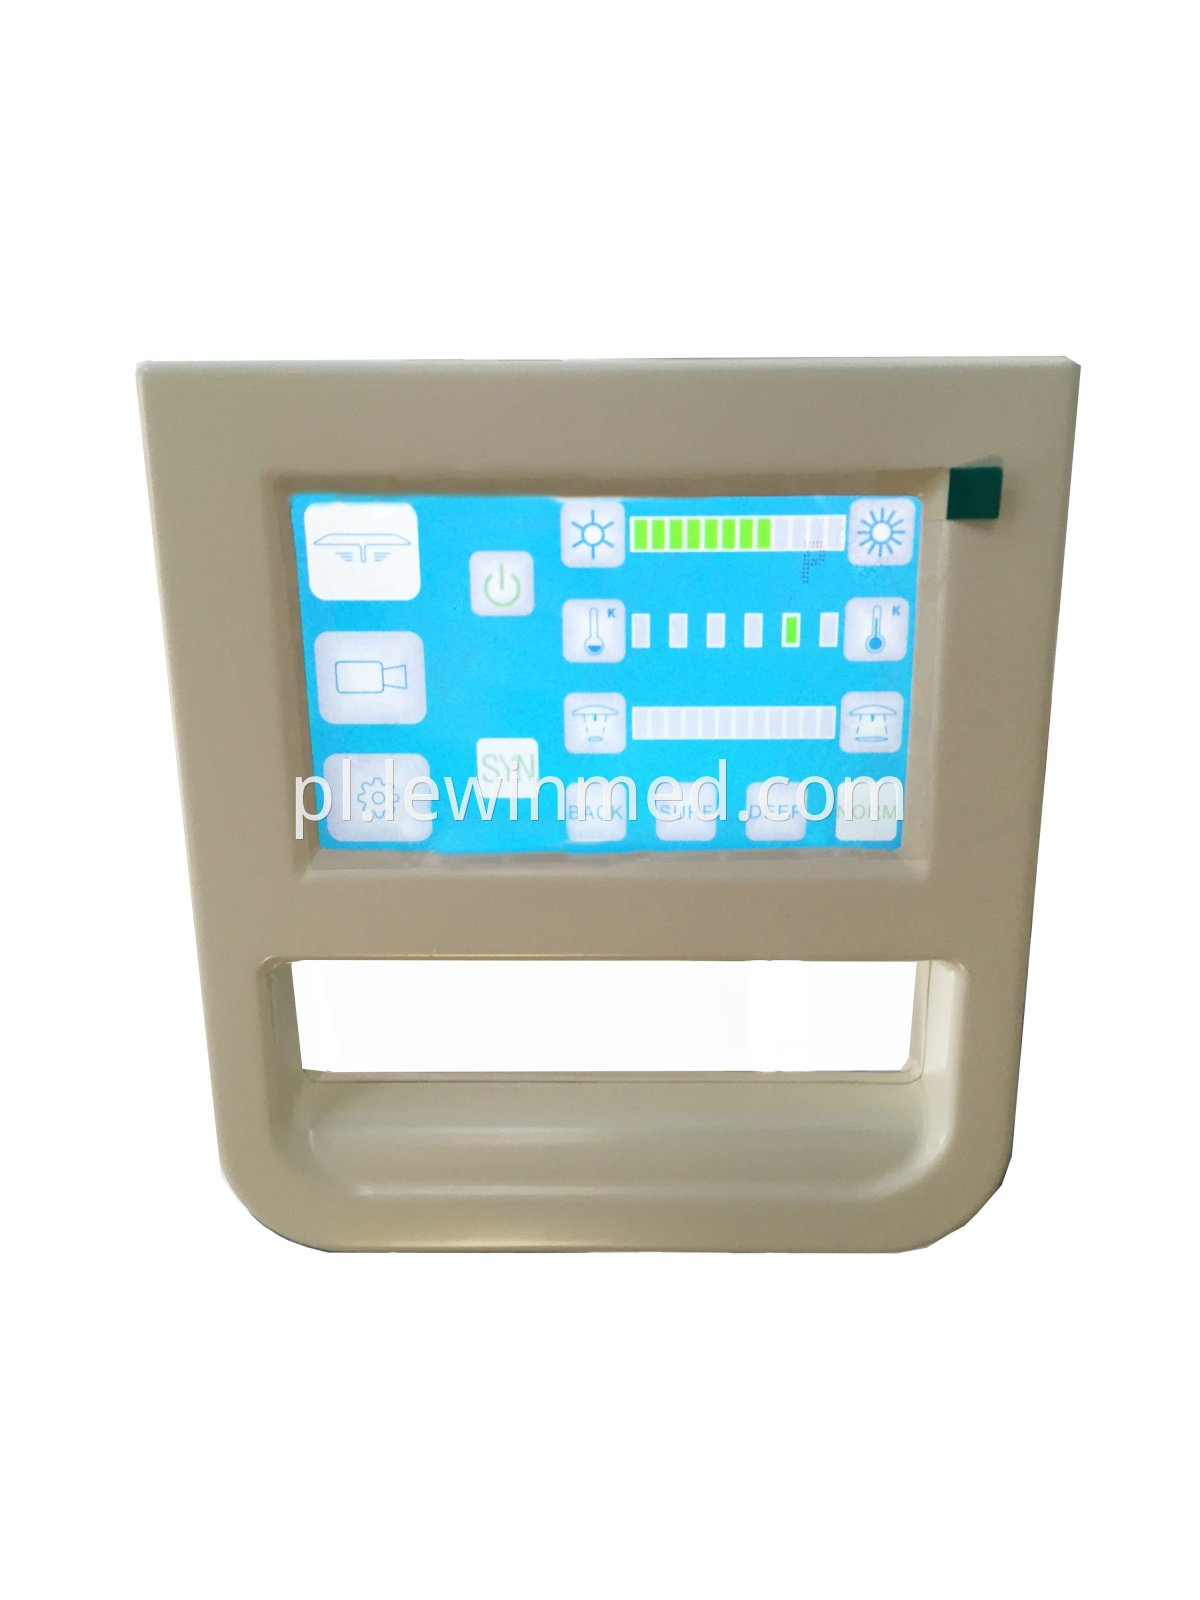 LCD controls